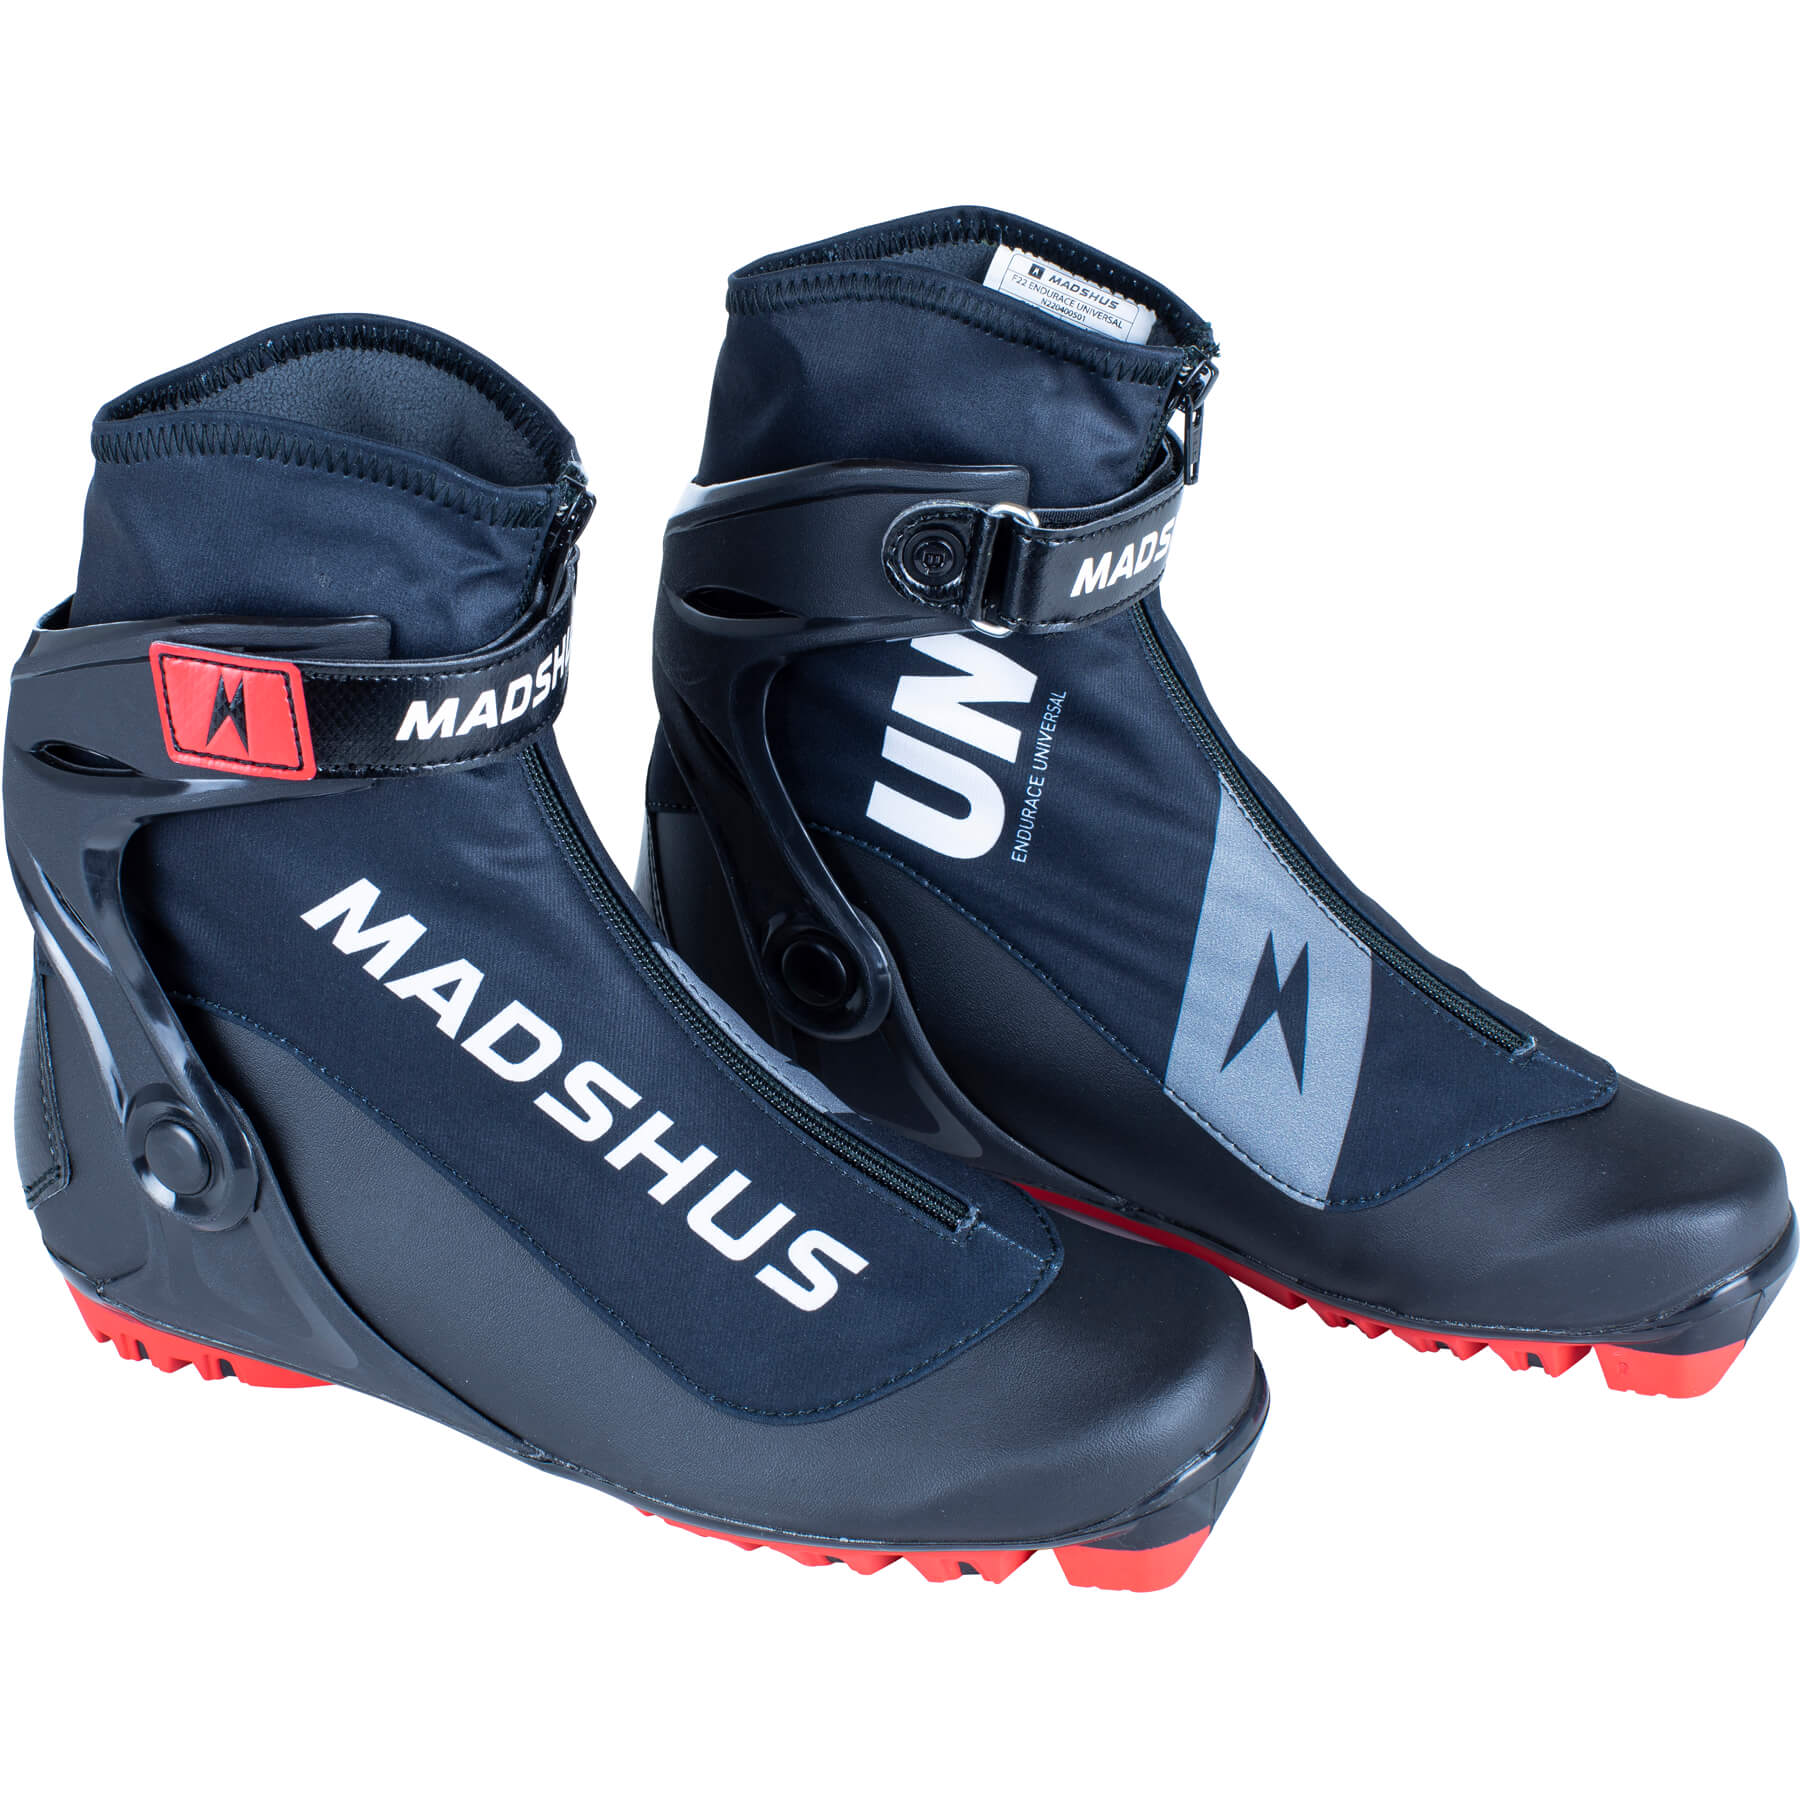 Madshus Endurace Universal Boot - 0